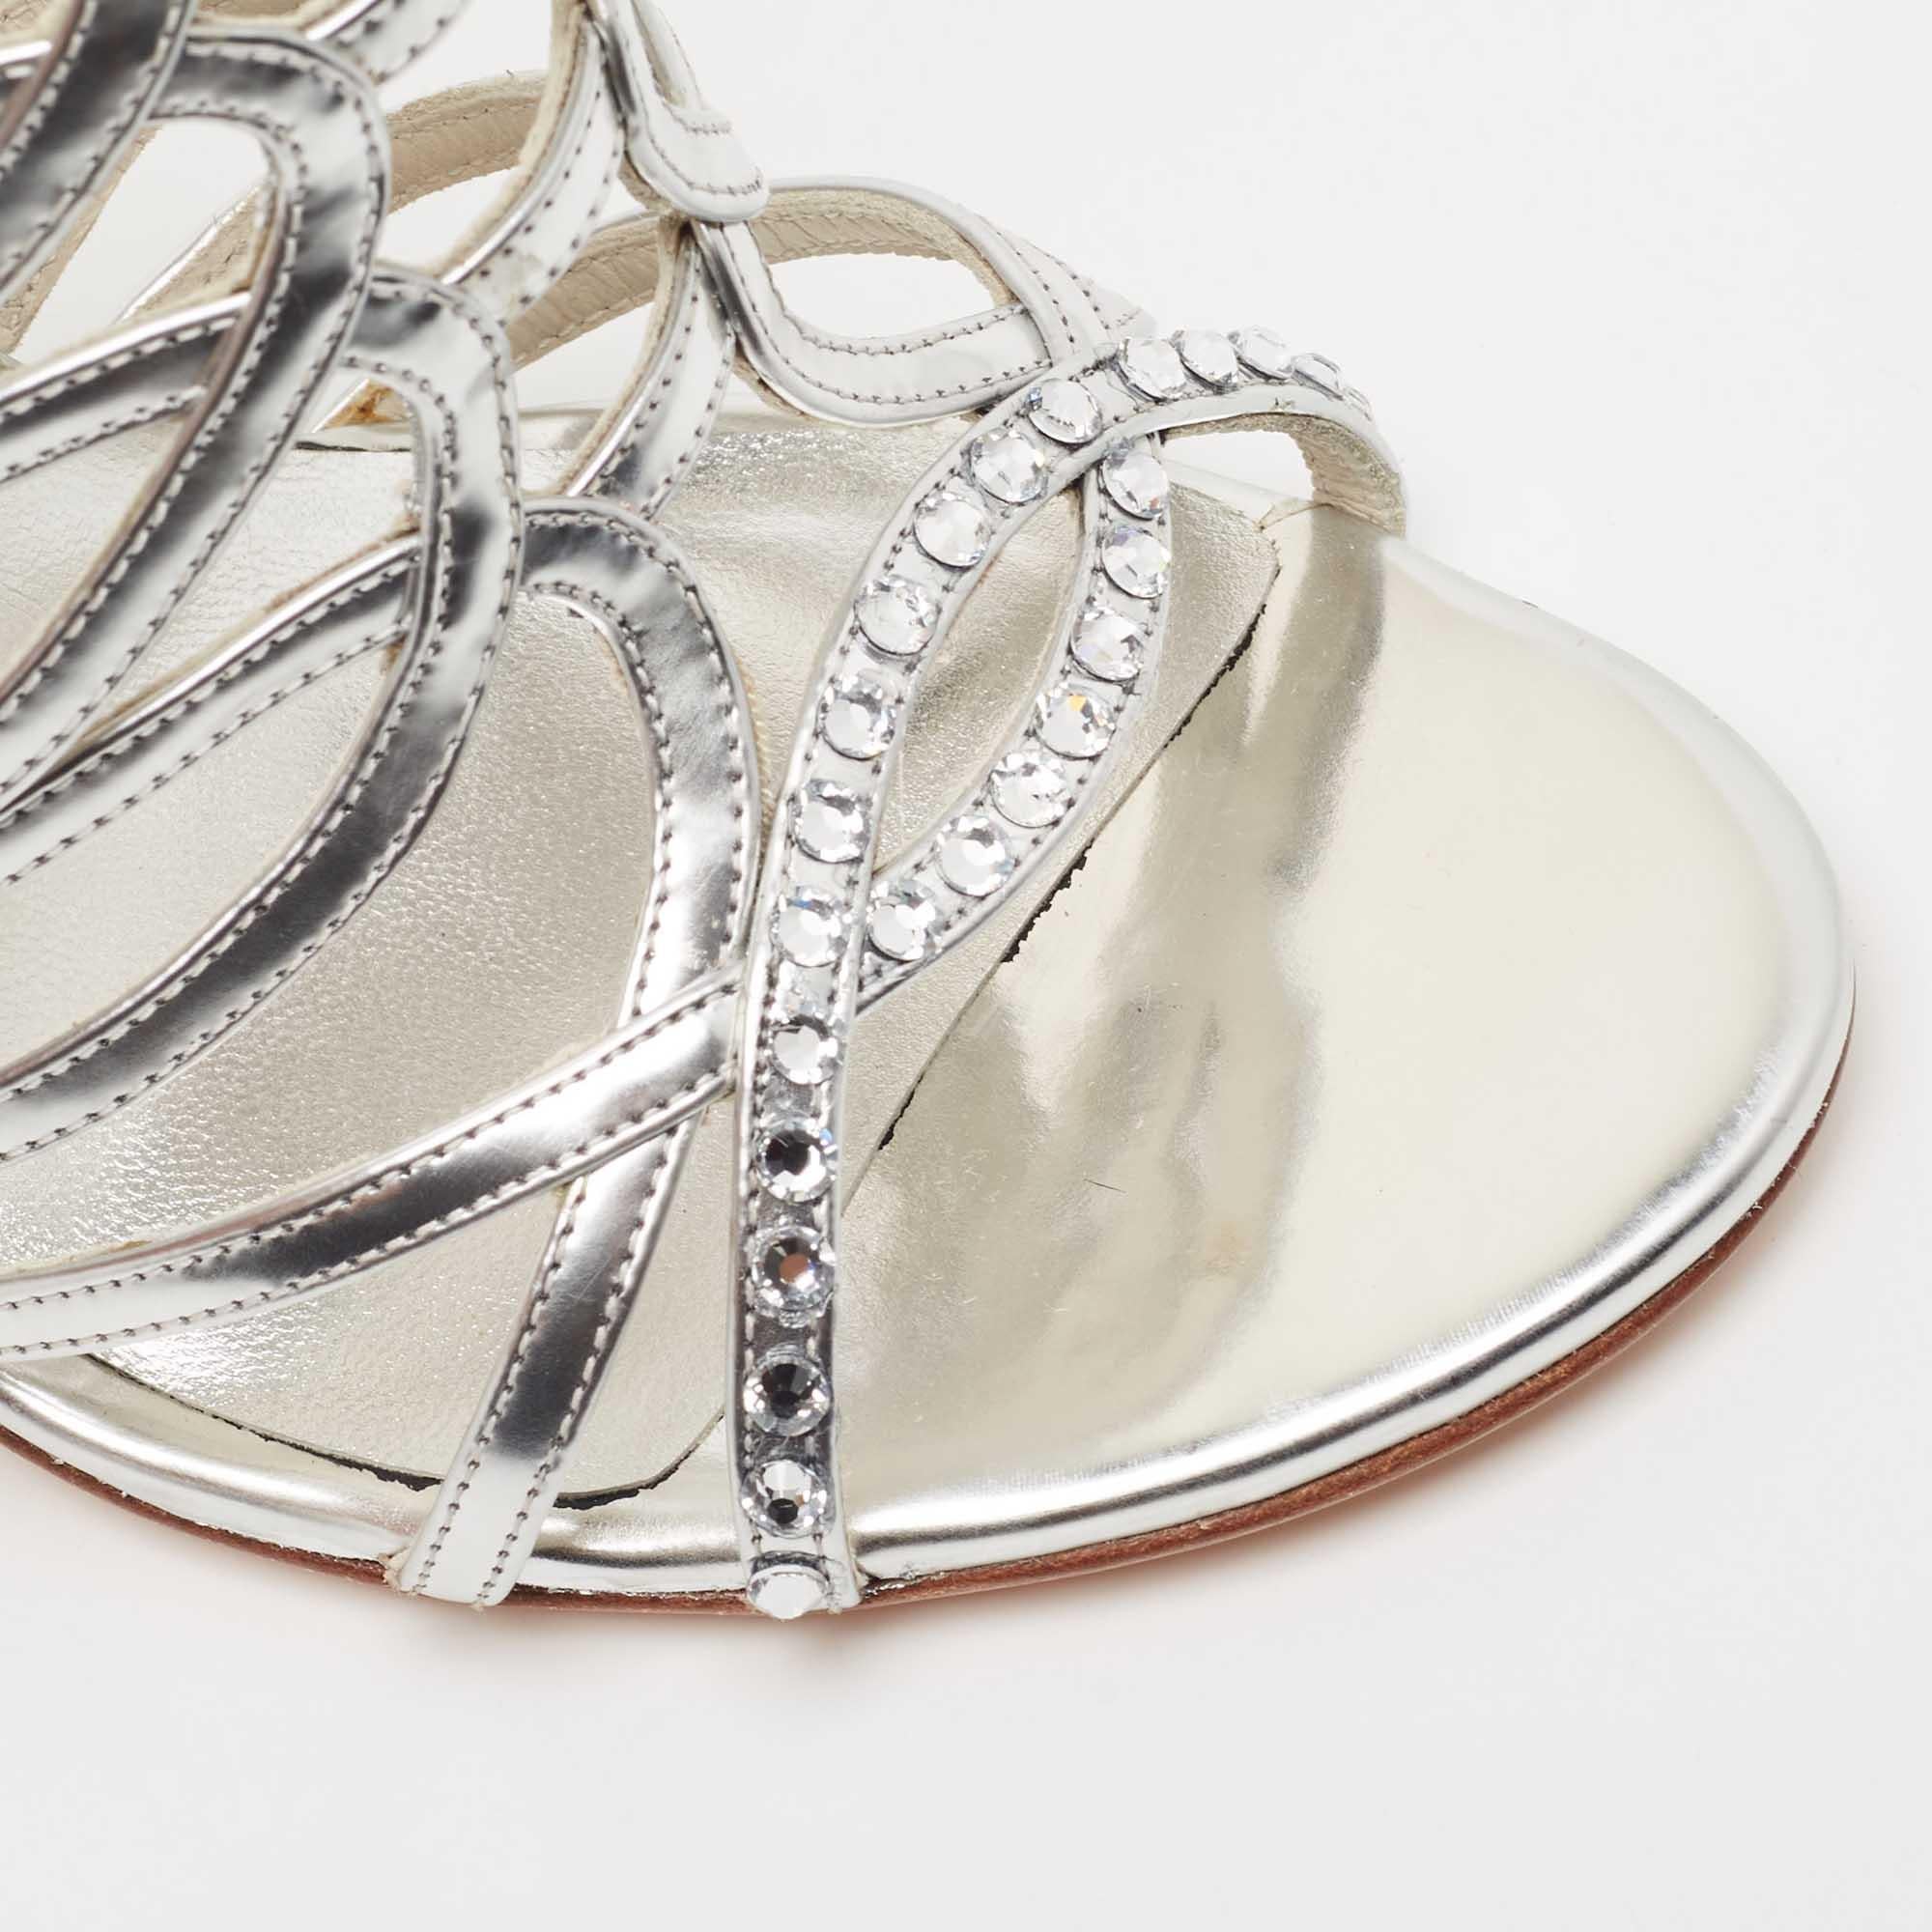 Stuart Weitzman Leather Crystal Embellished Strappy Sandals Size 39.5 For Sale 2